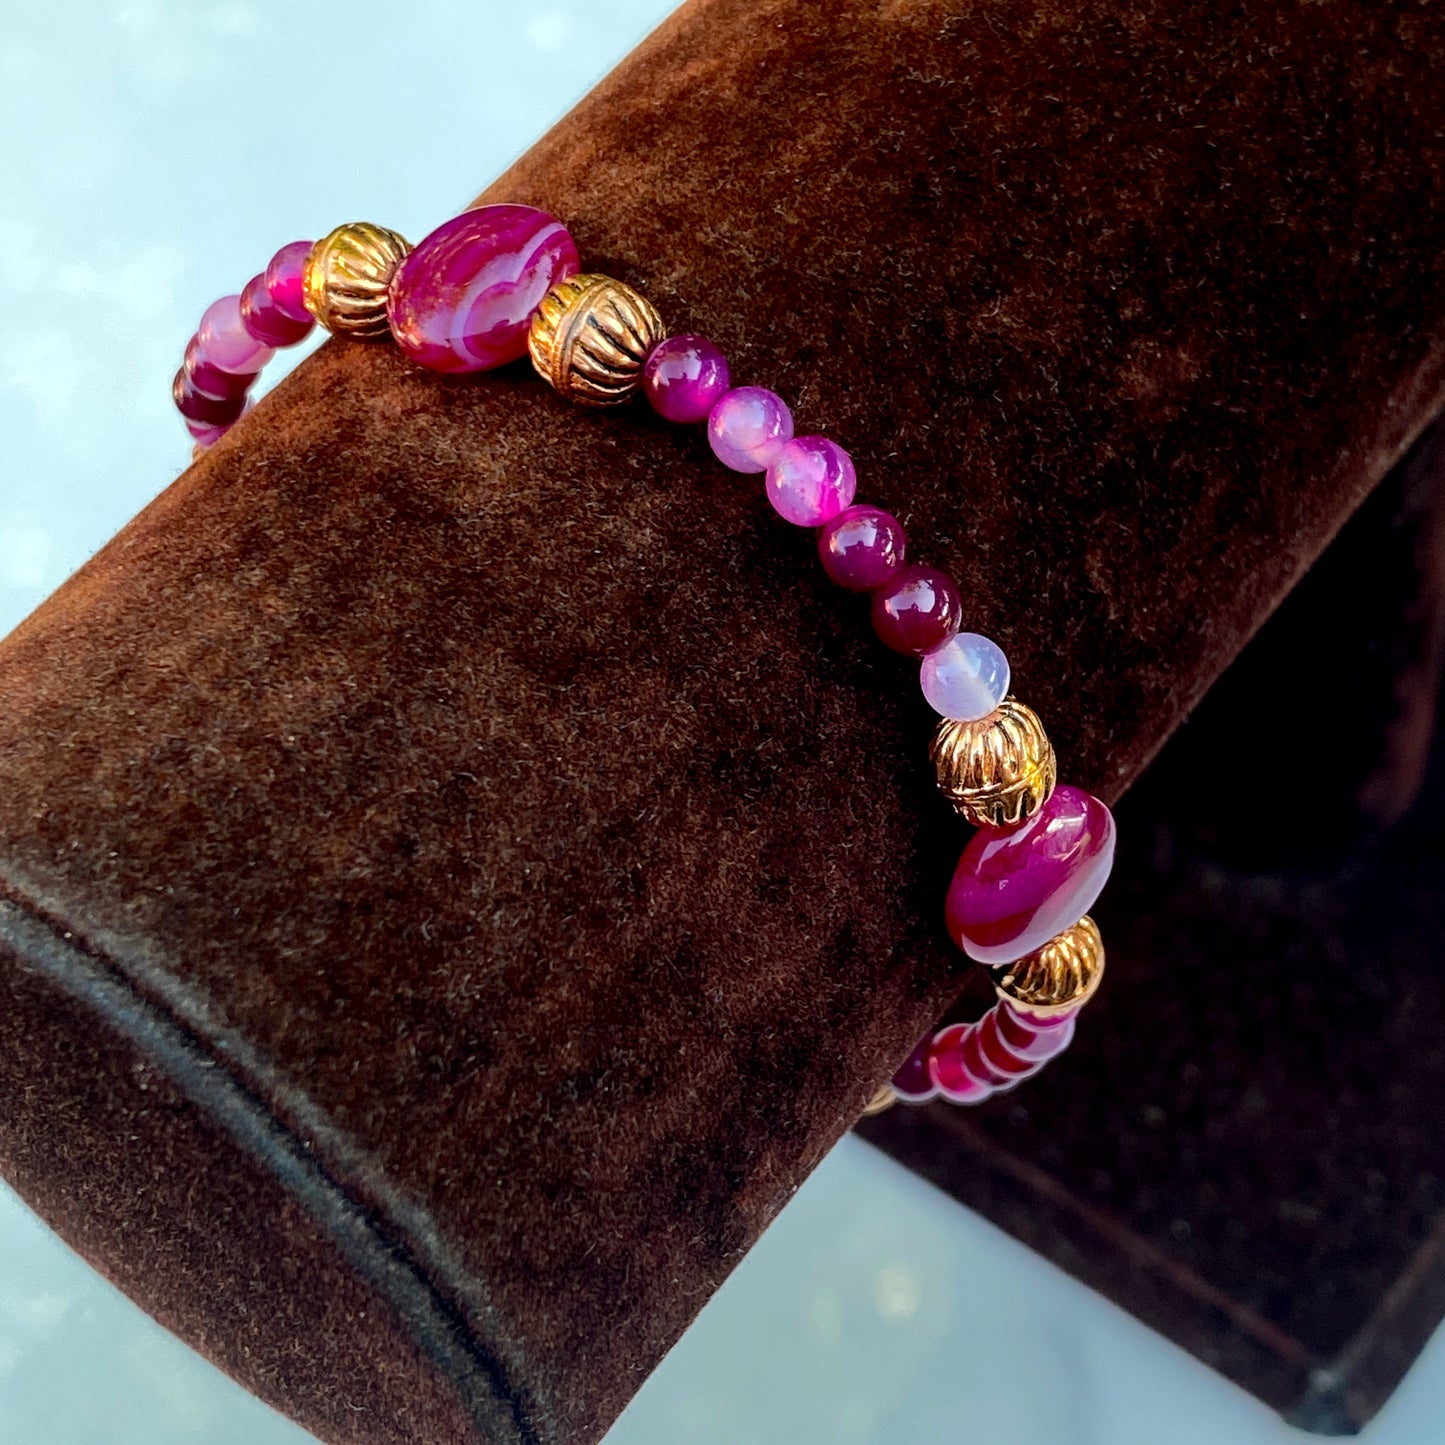 Pink Banded agate and copper bracelet